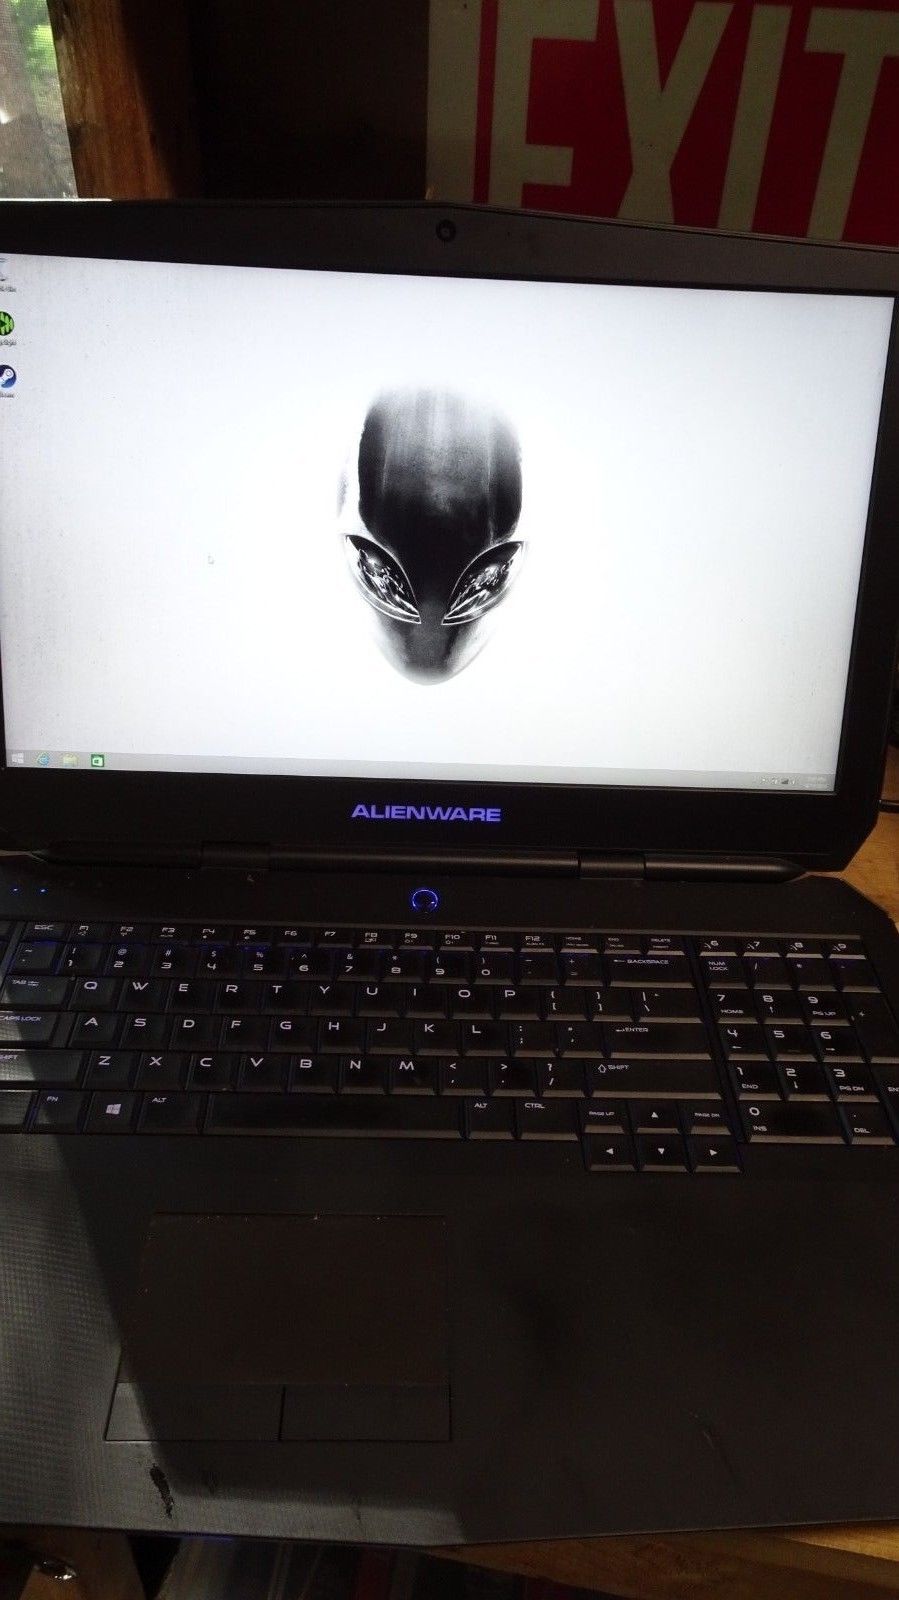 Alienware Laptop - 17 R3, i7 - 4720HQ - 2.6 GHz - 8GB - GTX 970M - 1TB